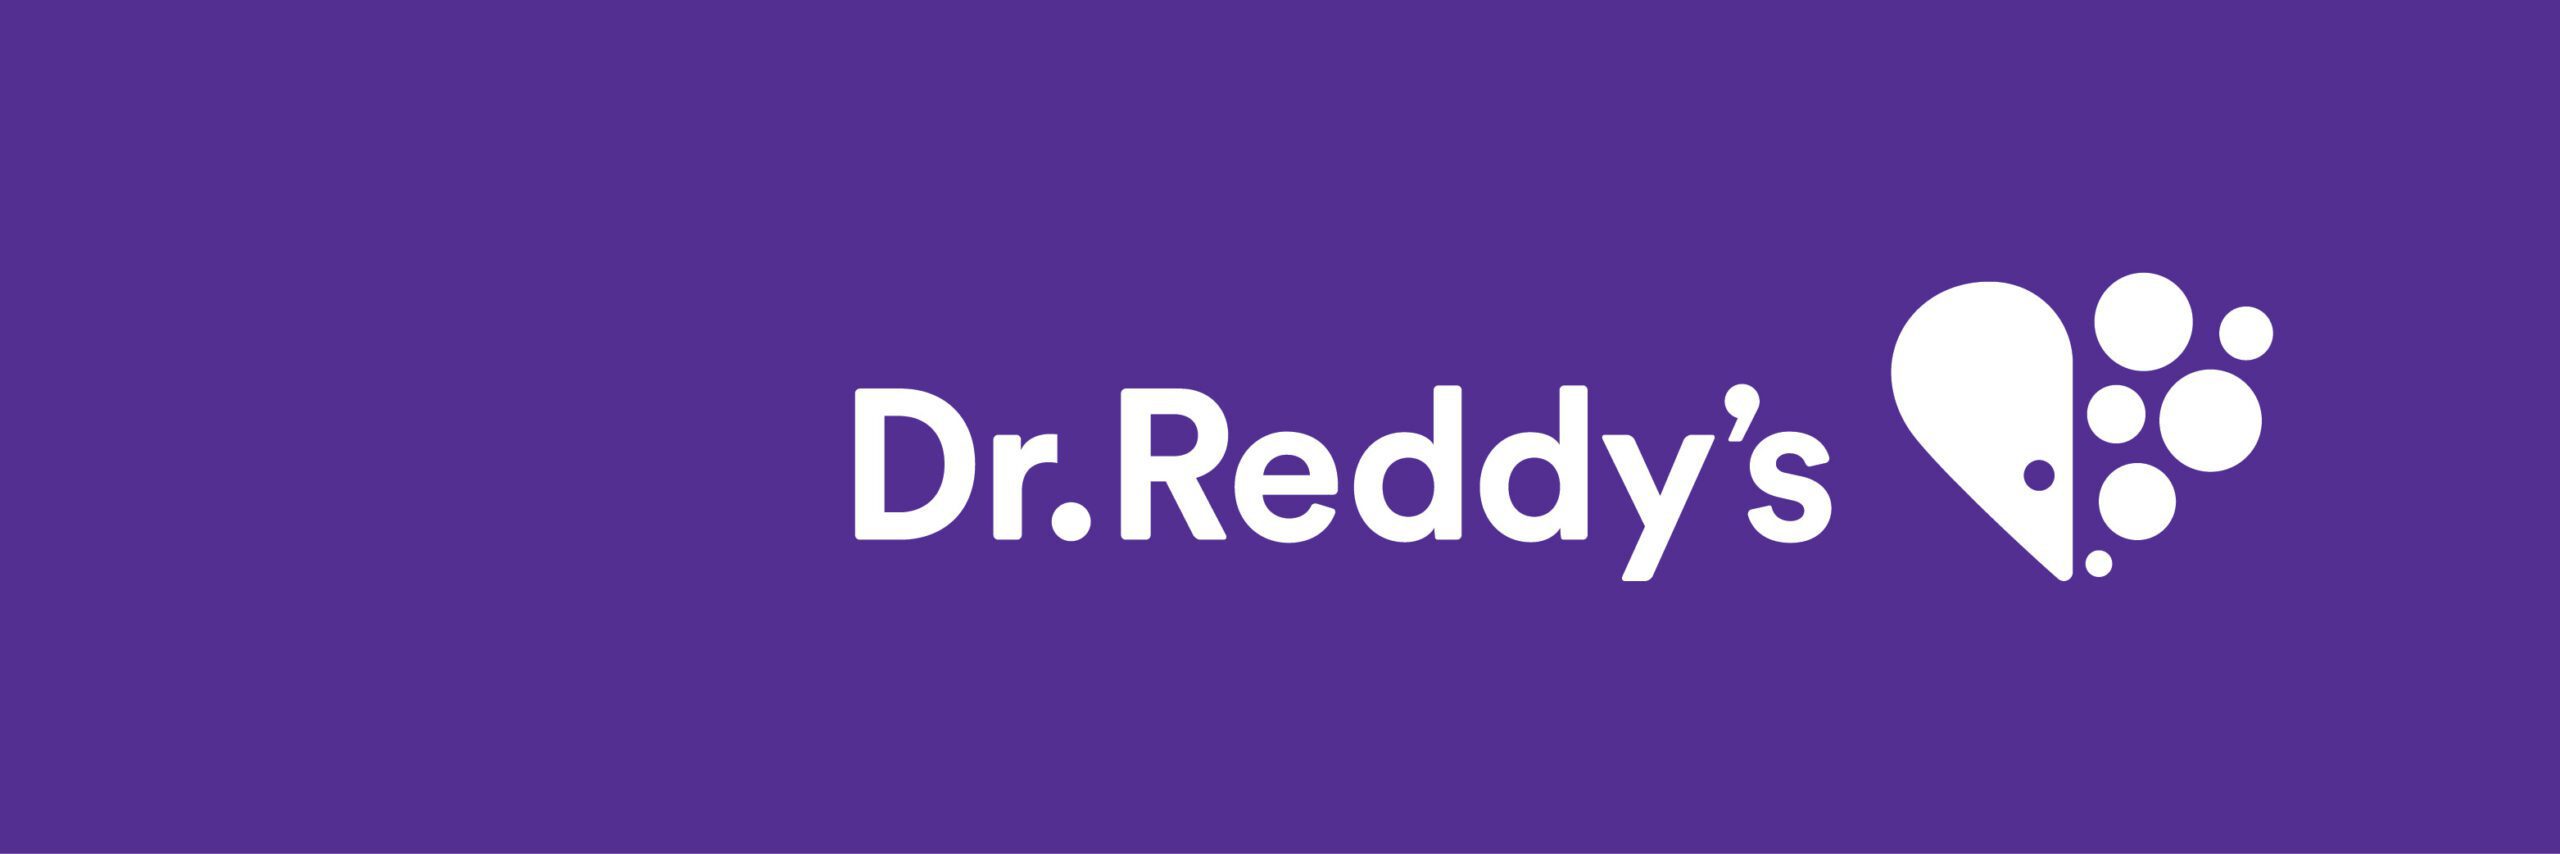 https://ipiedu.in/wp-content/uploads/2021/09/Dr.Reddys_logo-scaled.jpg